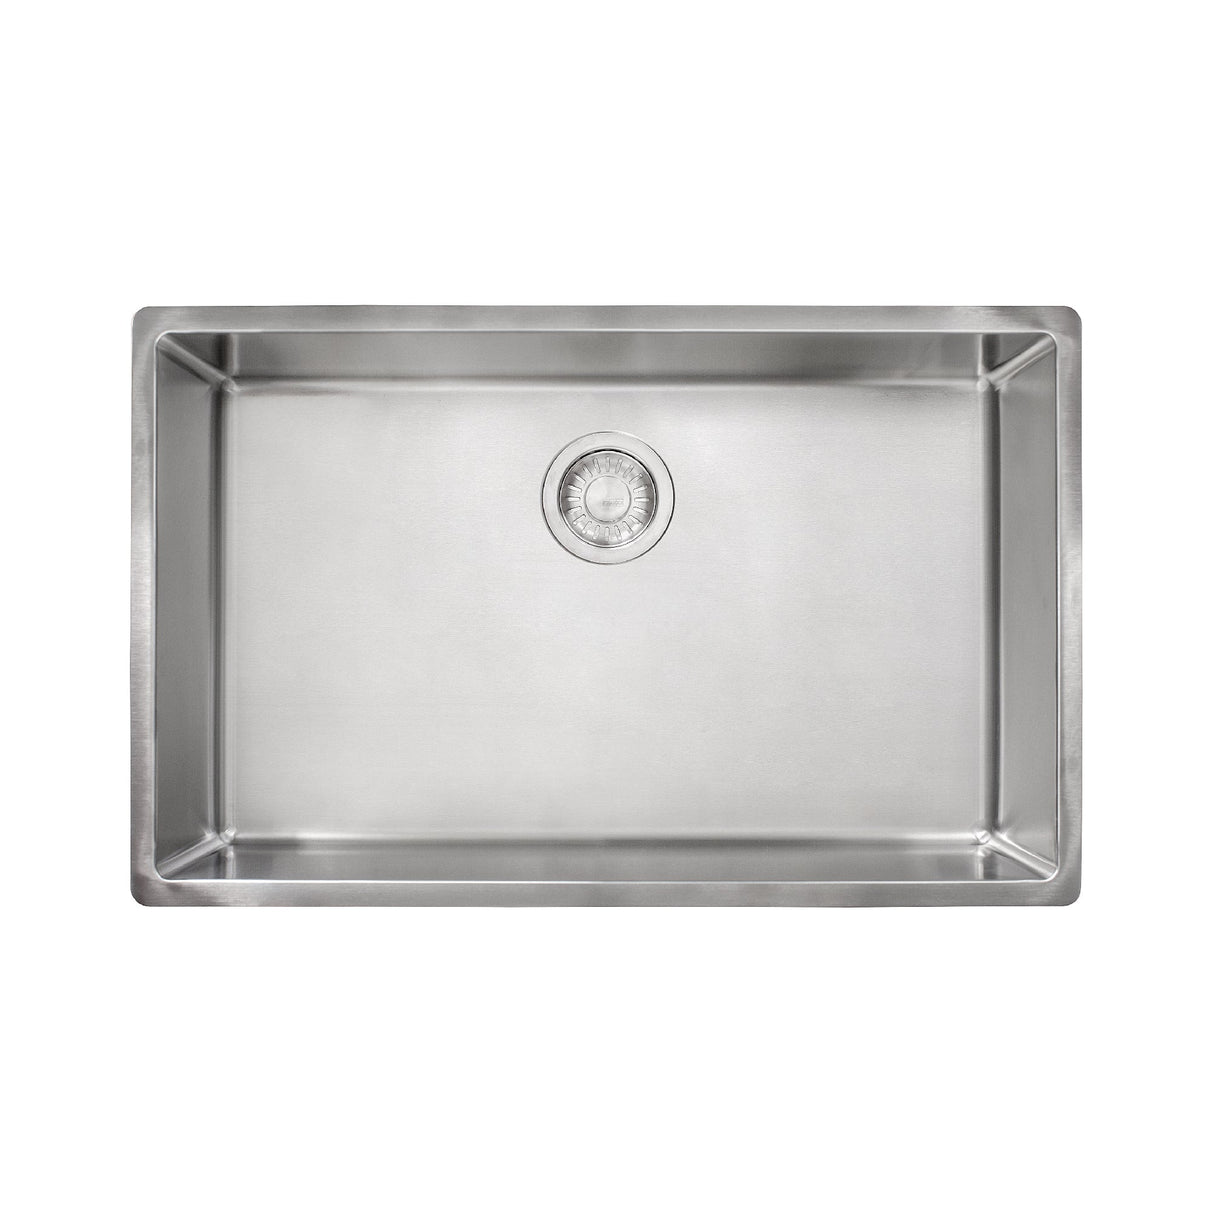 FRANKE CUX11027-ADA Cube 28.5-in. x 17.7-in. 18 Gauge Stainless Steel Undermount Single Bowl ADA Kitchen Sink - CUX11027-ADA In Pearl